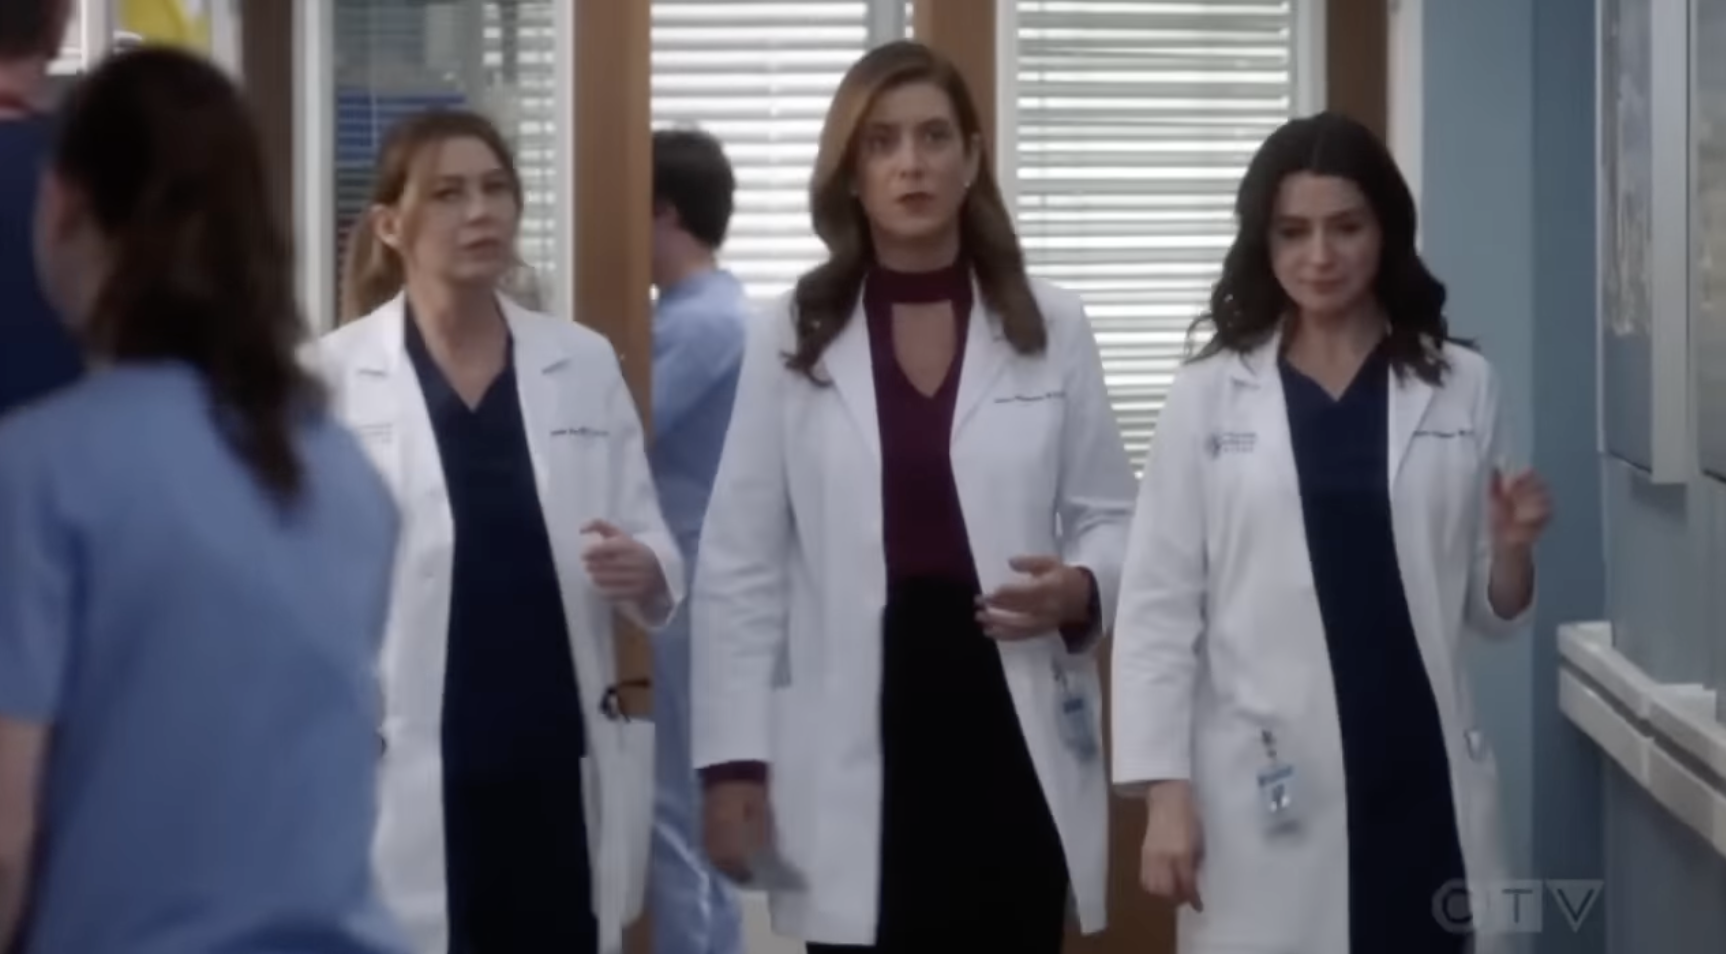 Meredith Grey, Addison Shepherd and Amelia Shepherd are walking down a hospital hallway, all wearing lab coats